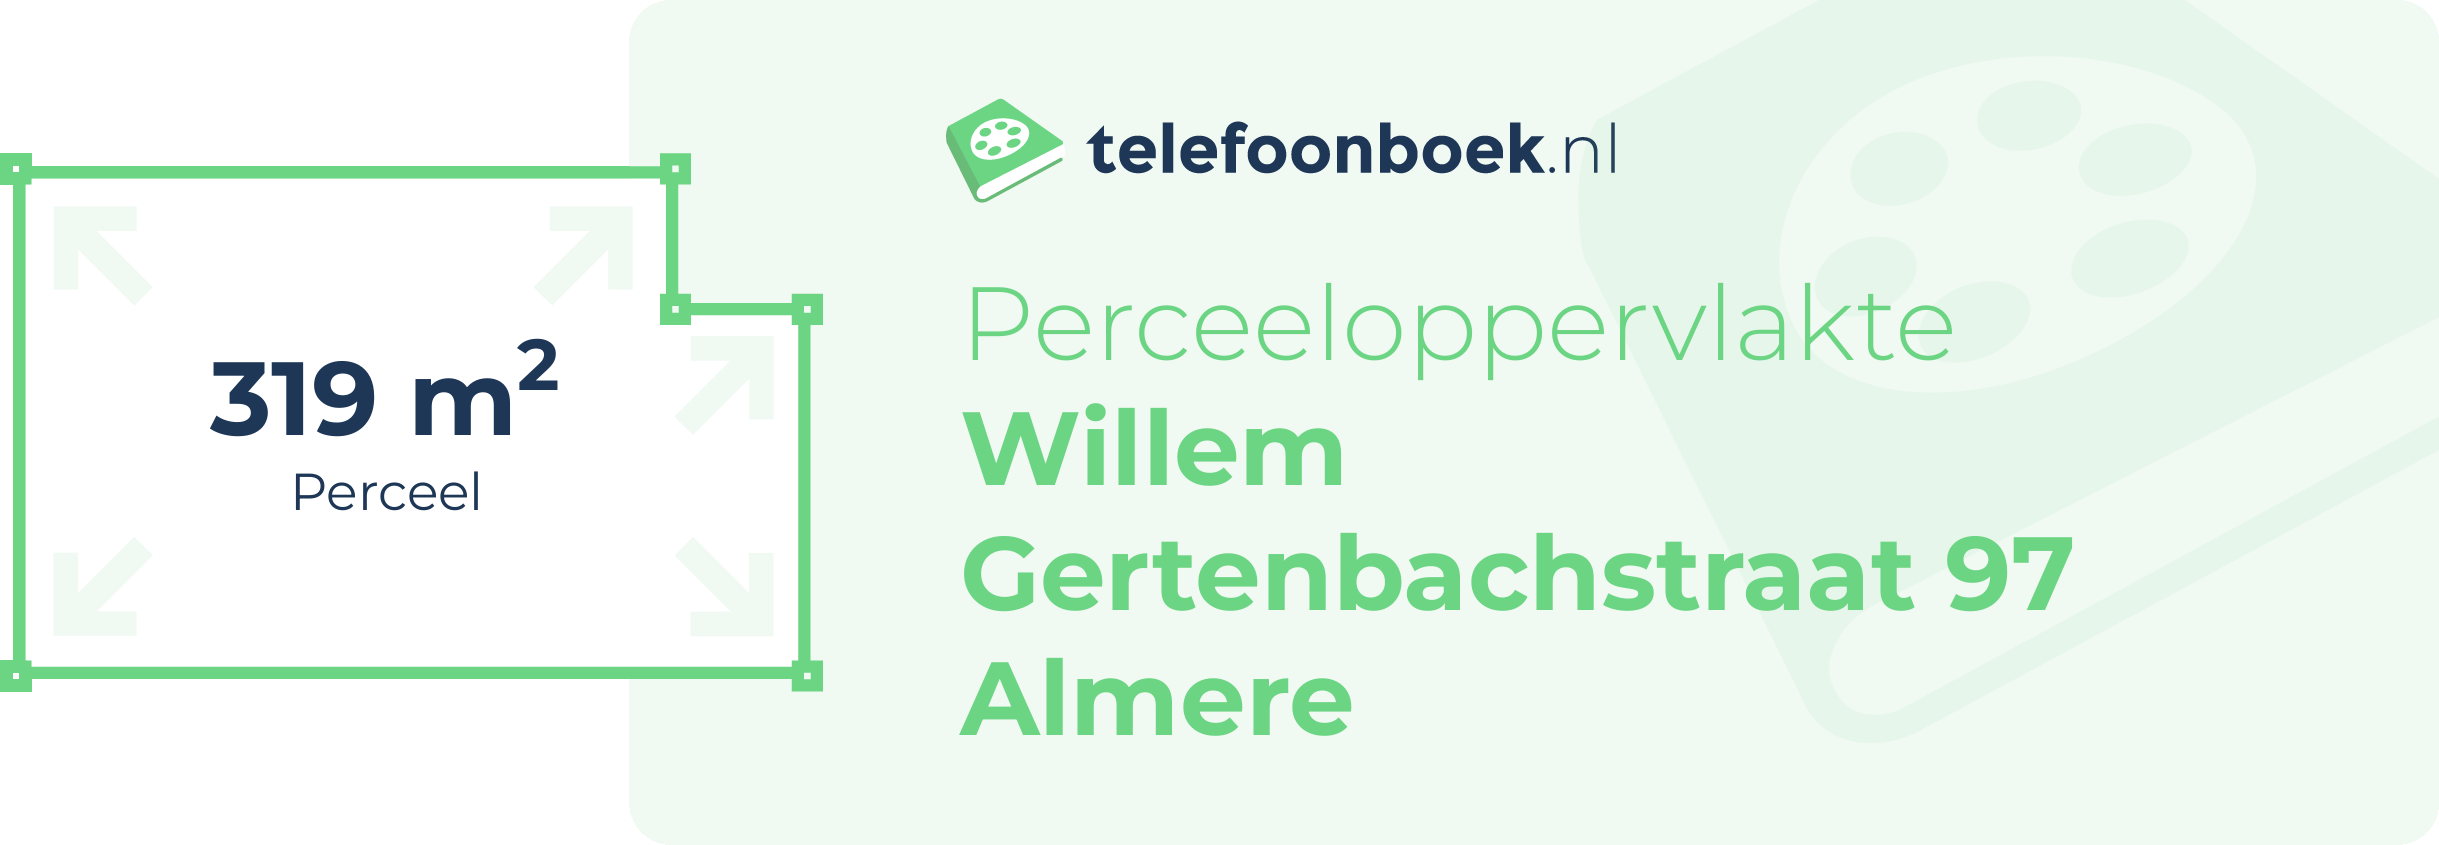 Perceeloppervlakte Willem Gertenbachstraat 97 Almere